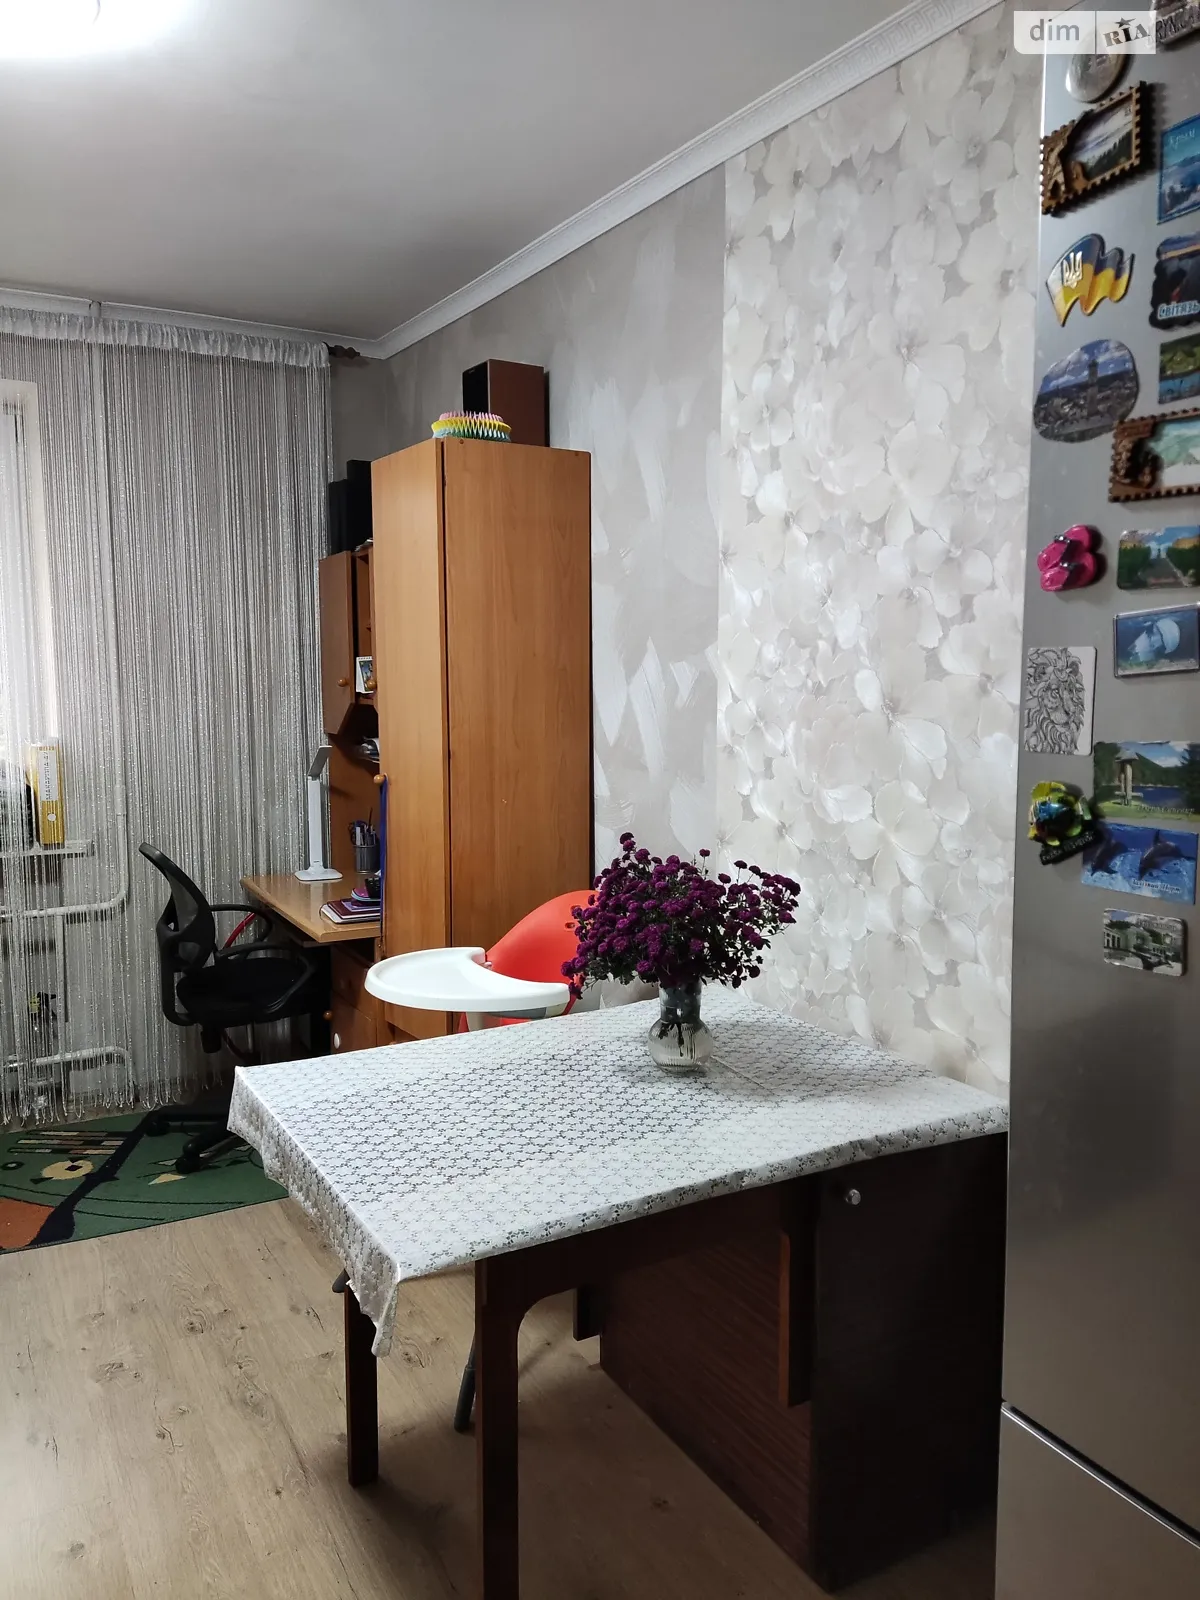 Продается комната 32.4 кв. м в Ровно - фото 3